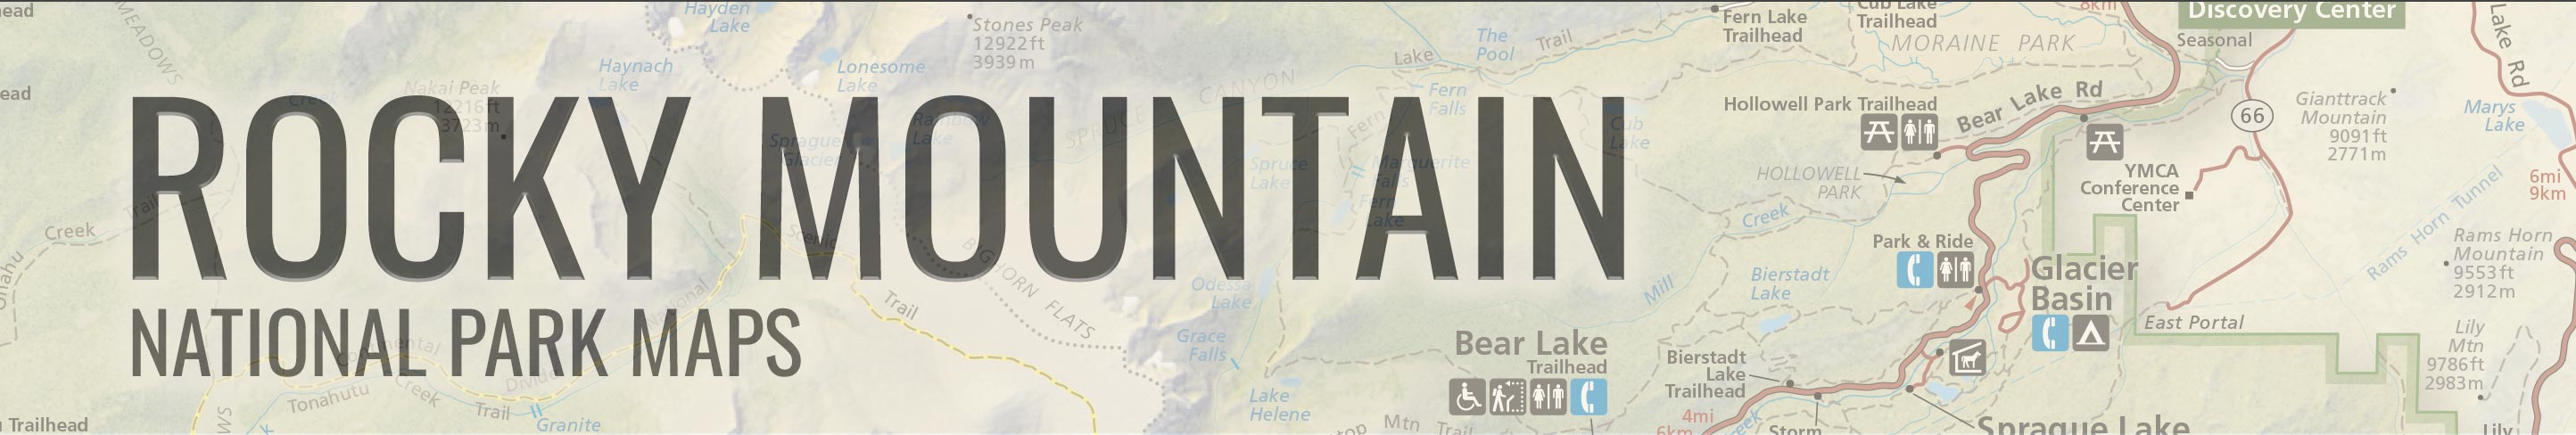 rocky-mountain-national-park-maps-header